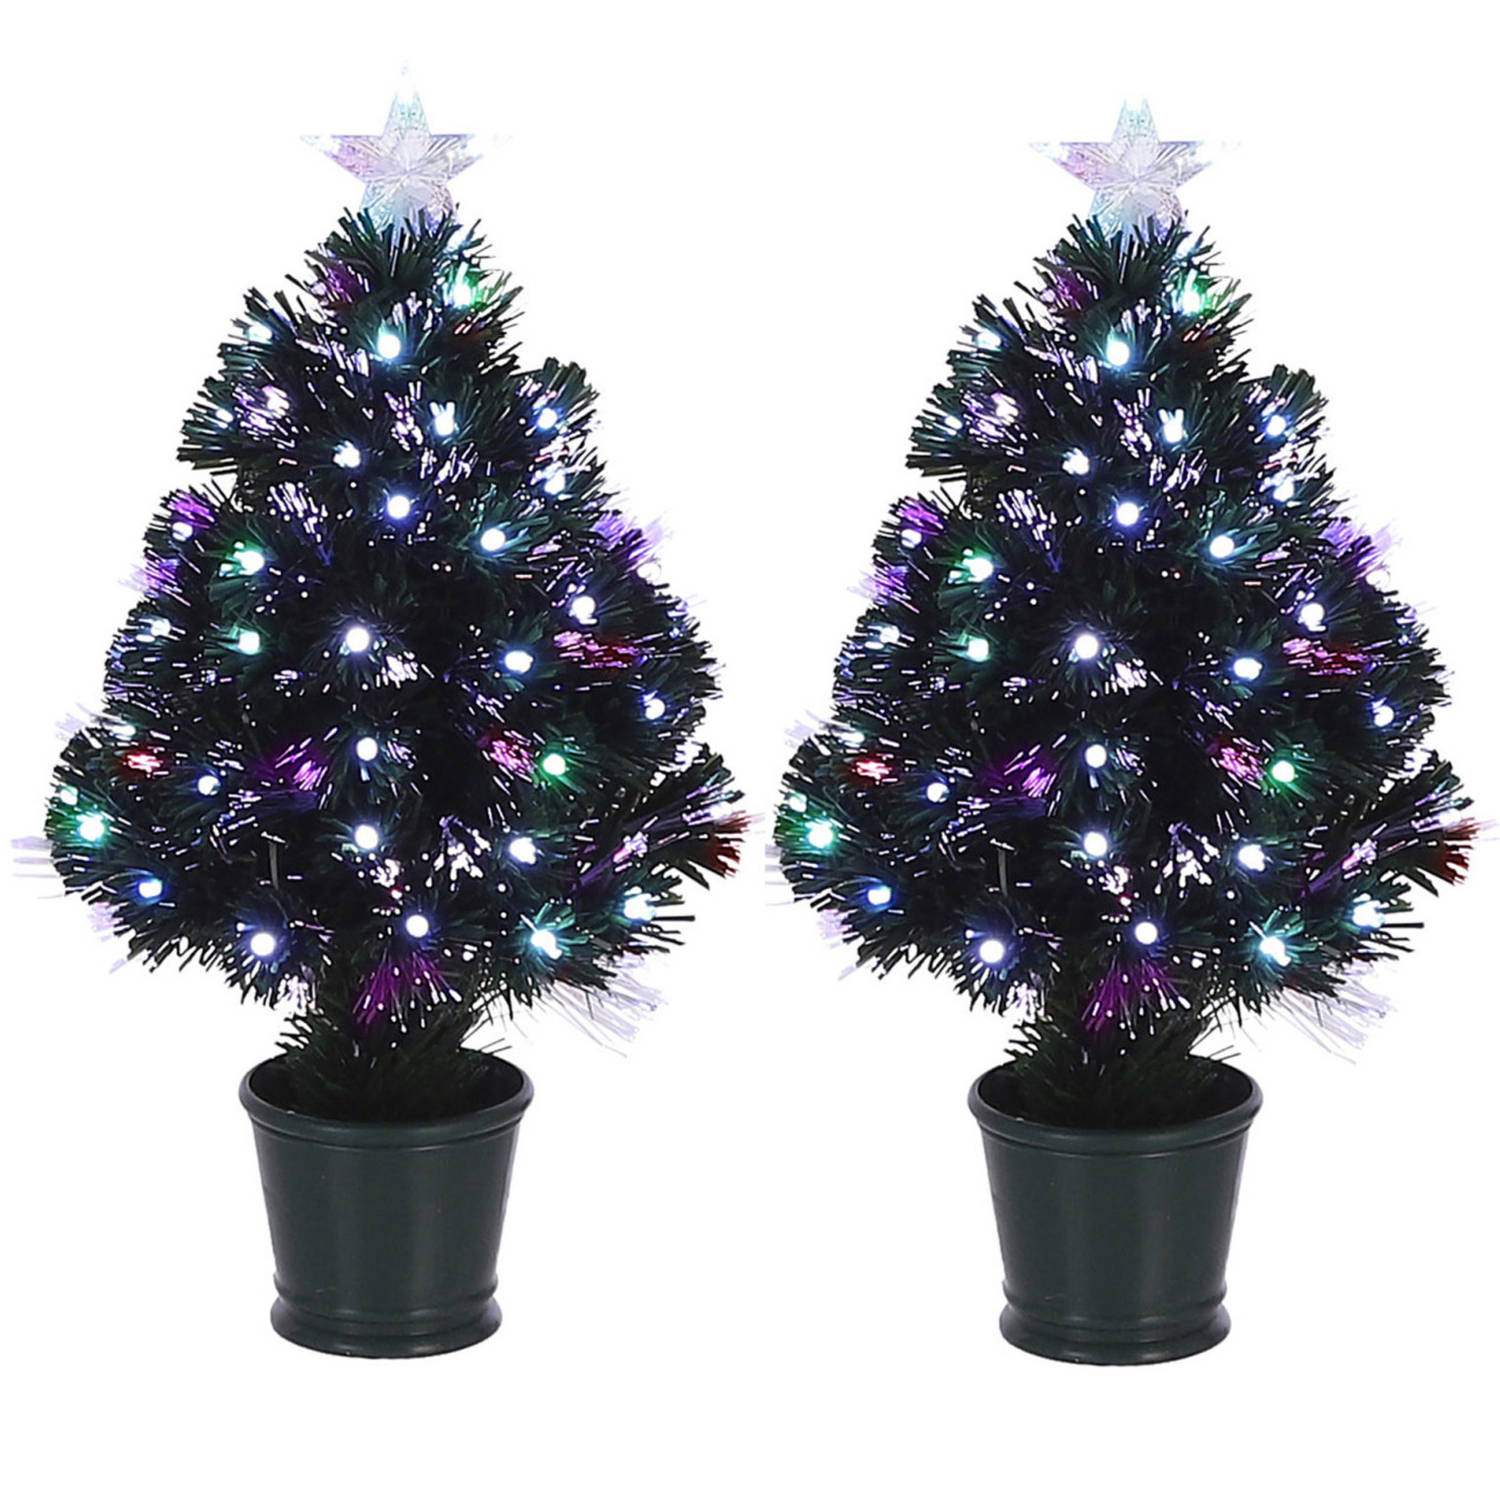 2x Fiber optic kerstboom/kunst kerstboom met knipperende verlichting en piek ster 60 cm - Kunstkerstboom